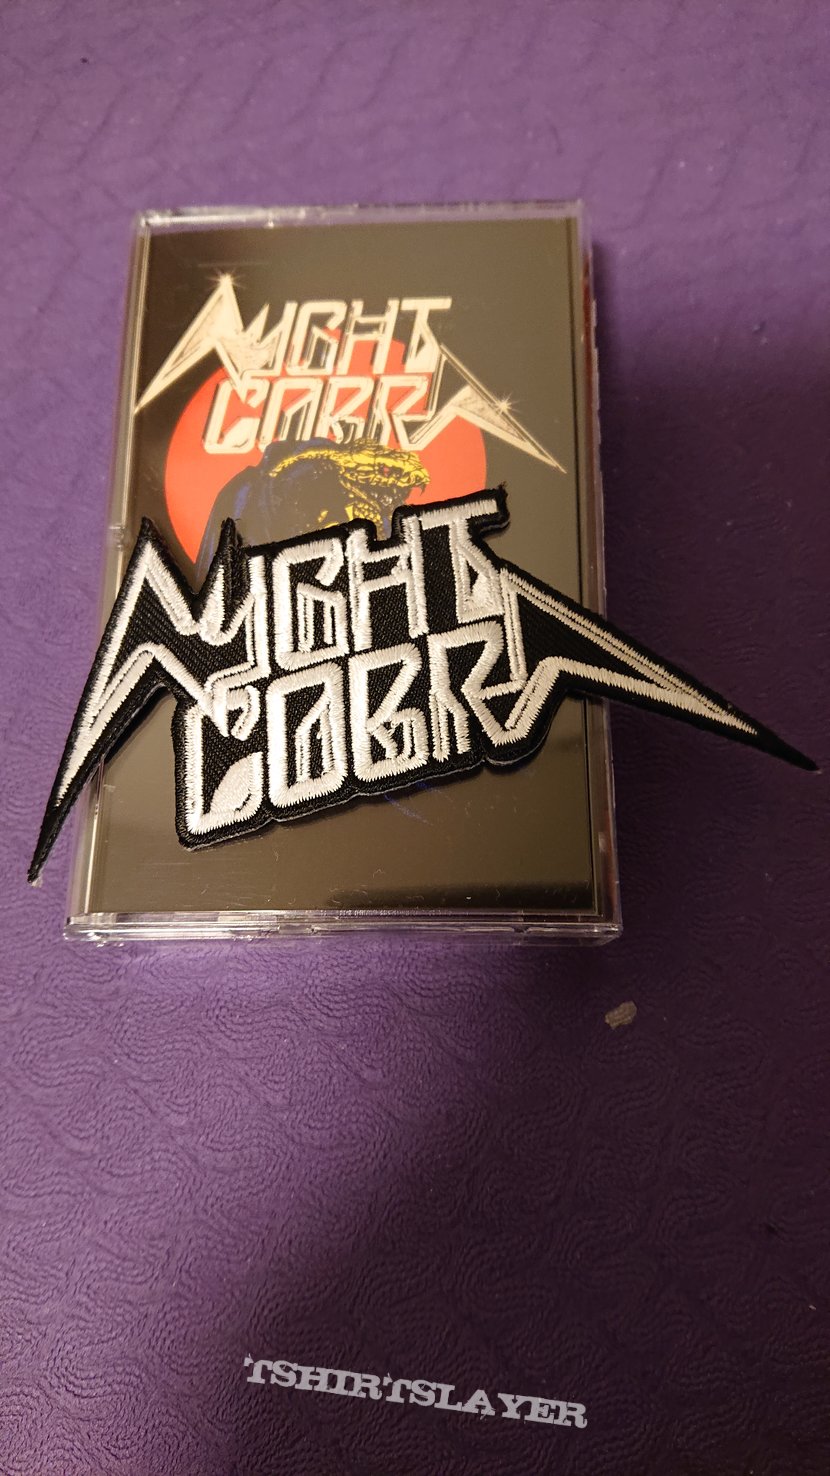 Night Cobra new patch